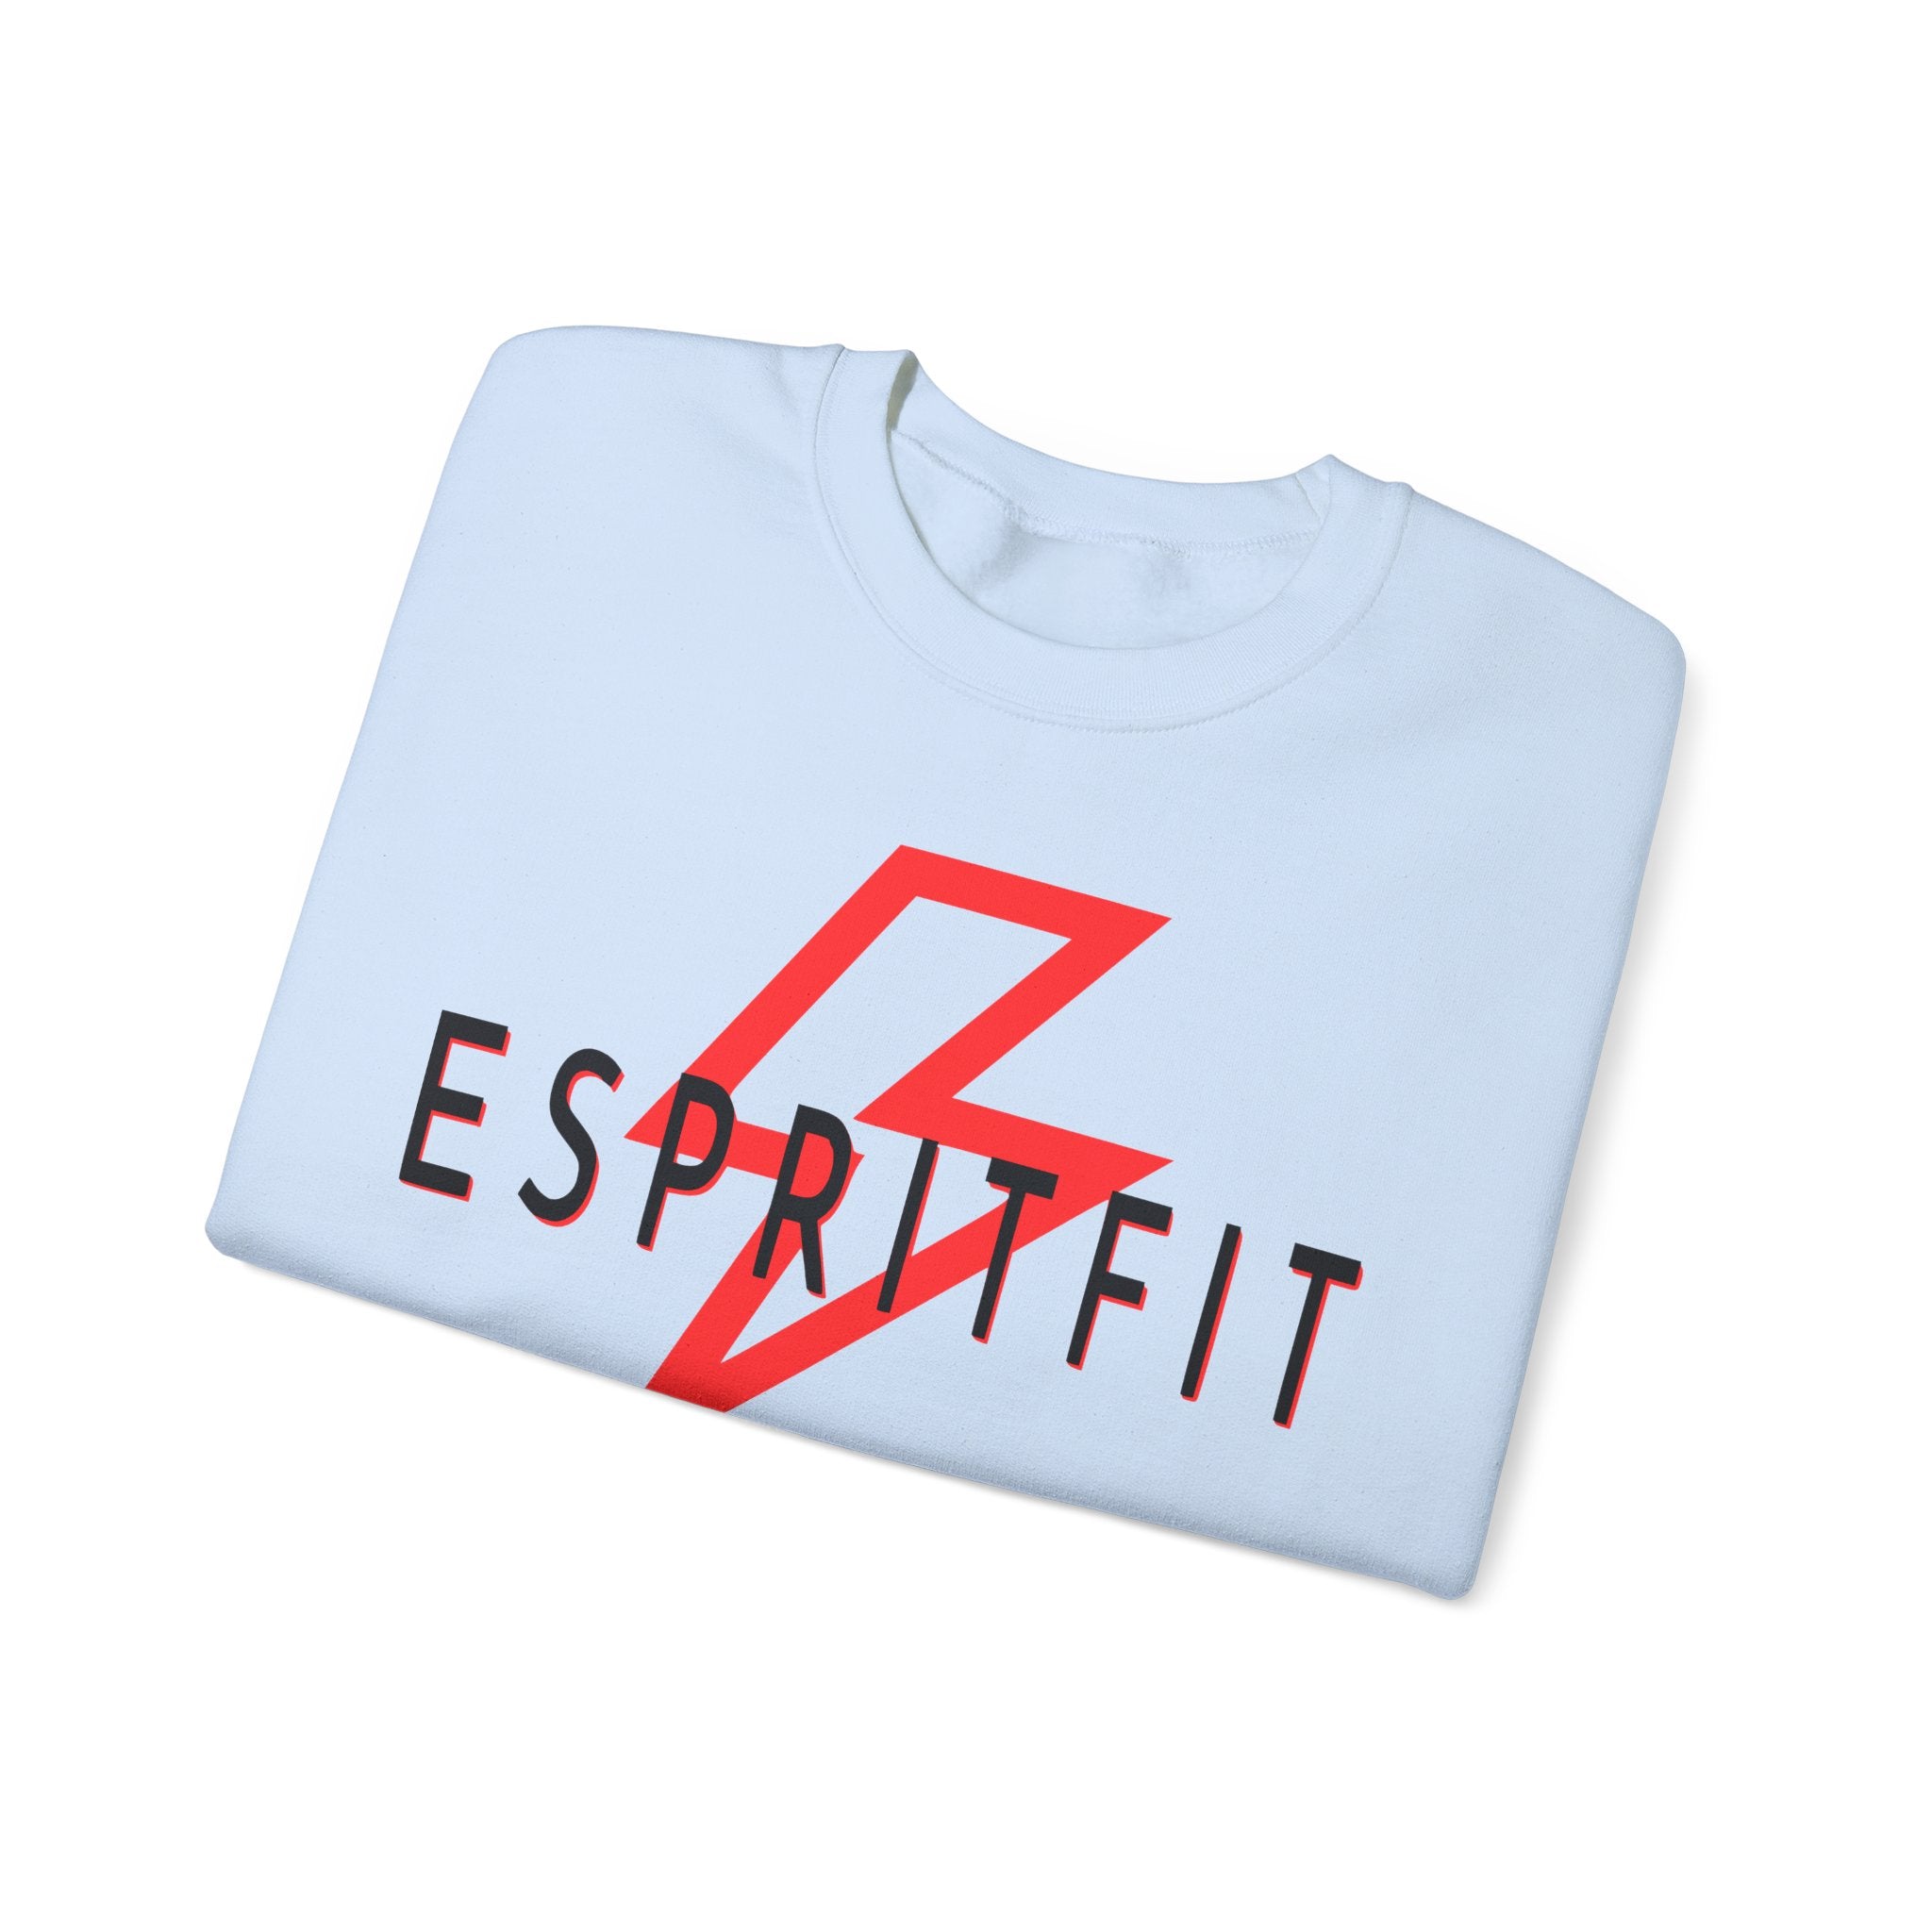 Espritfit EcoClassic Crew